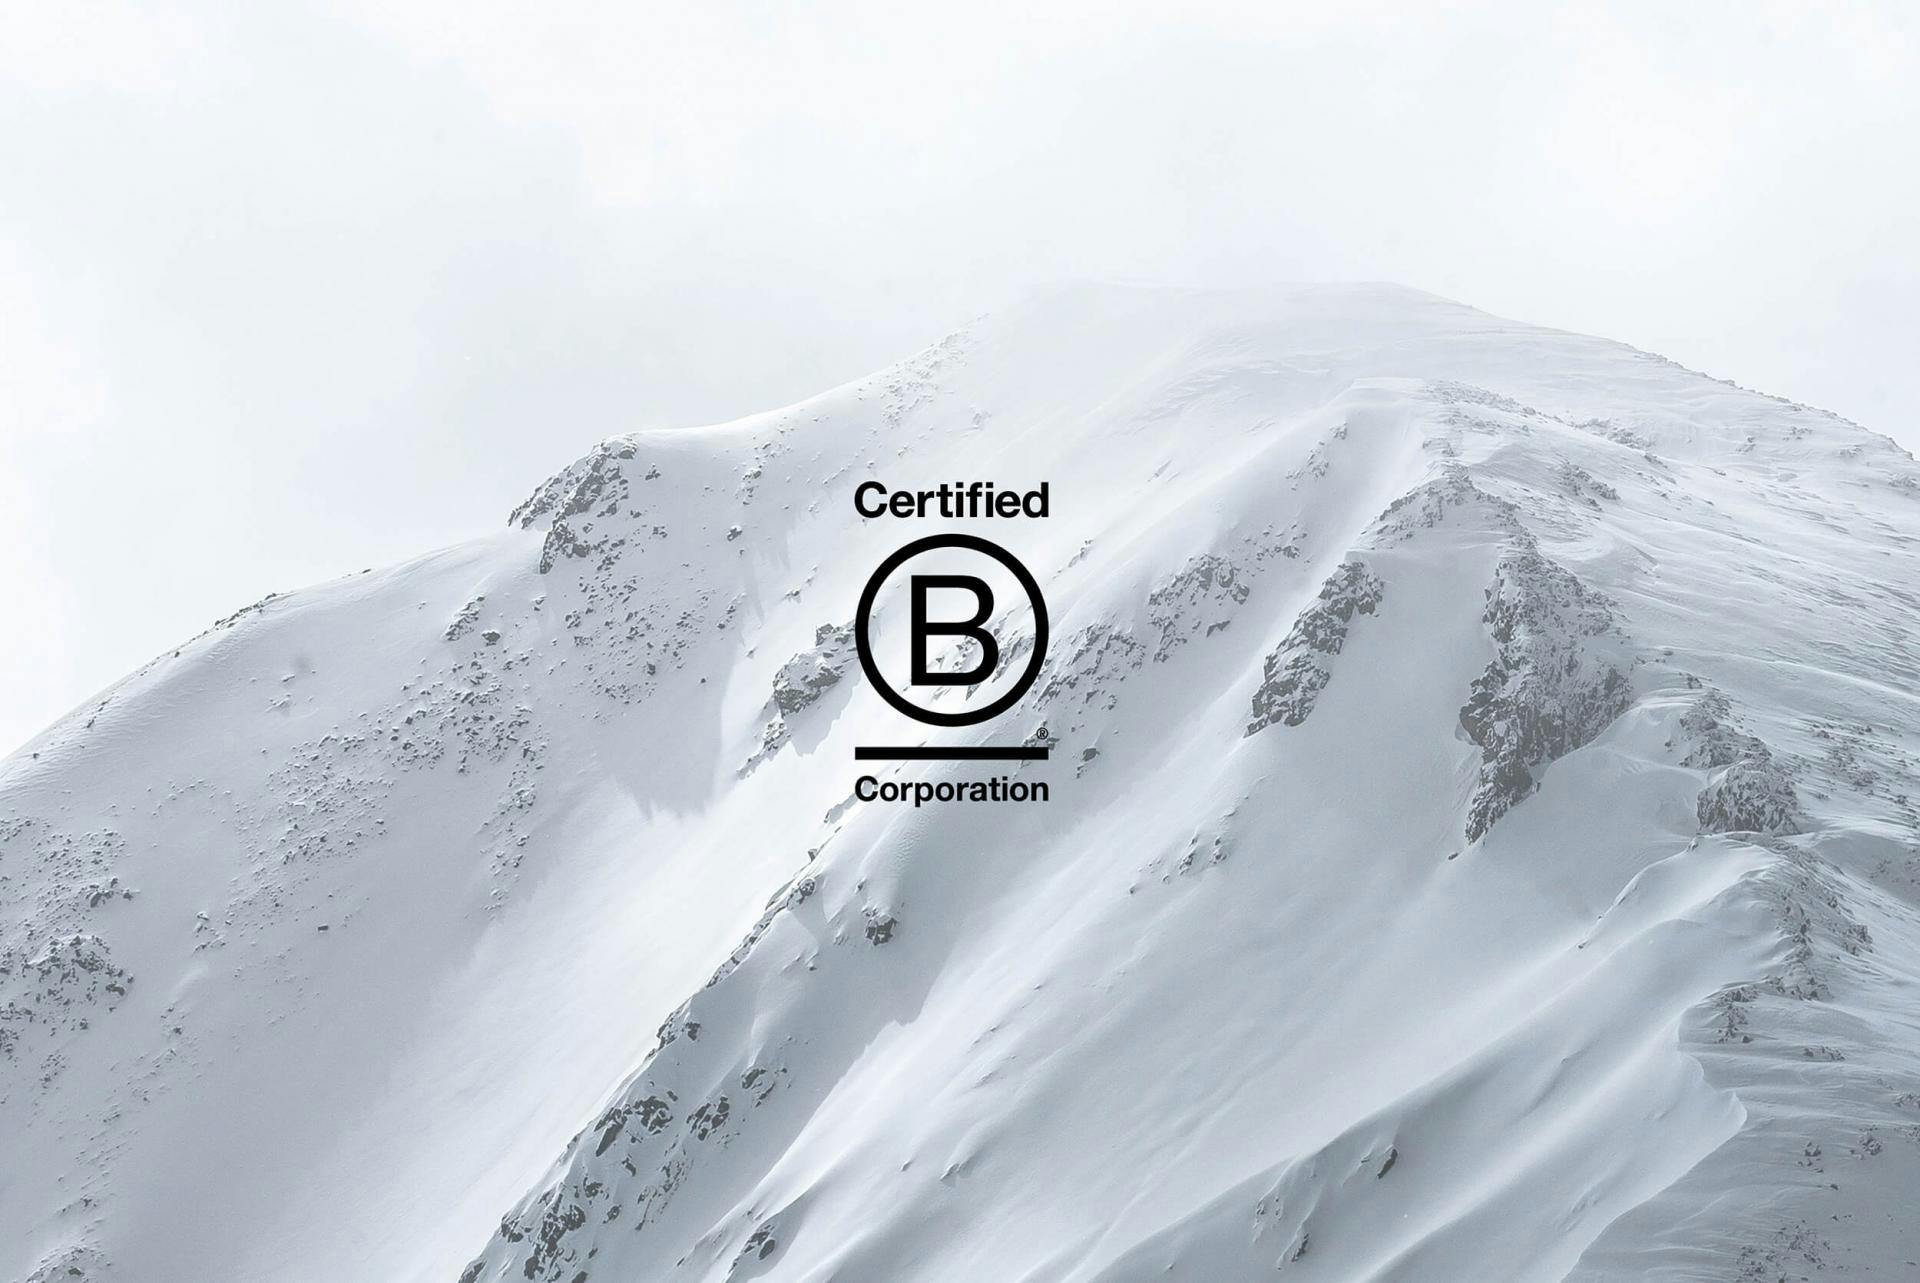 Certified "B" Corporation.